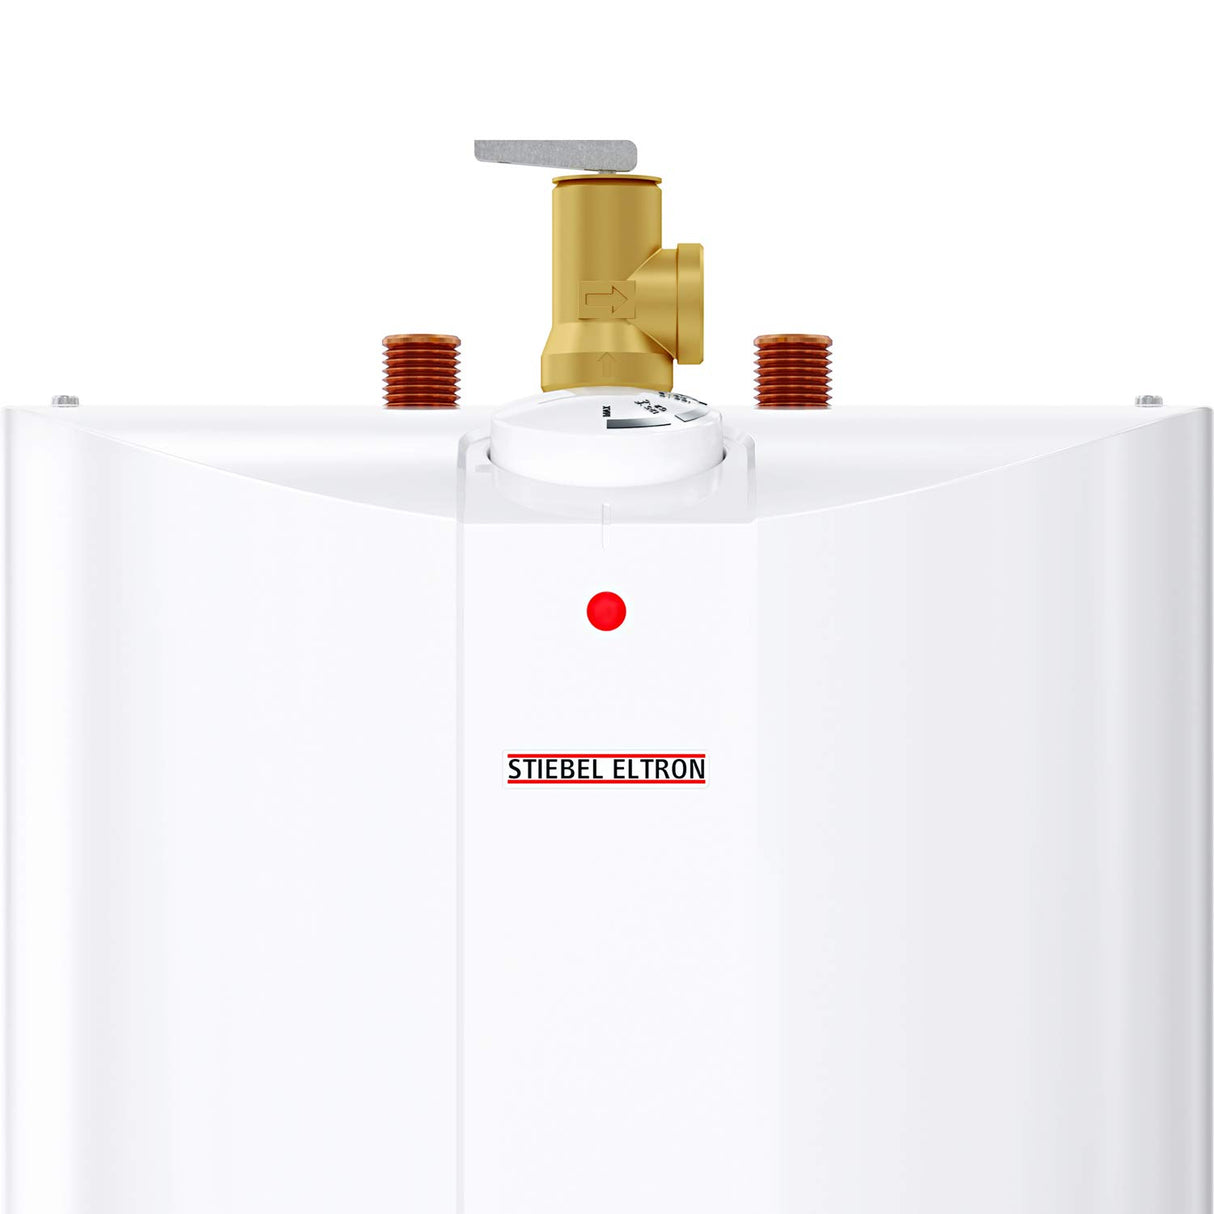 Stiebel Eltron 234046 SHC 4 4 Gallon Water Heater, 4-Gallon